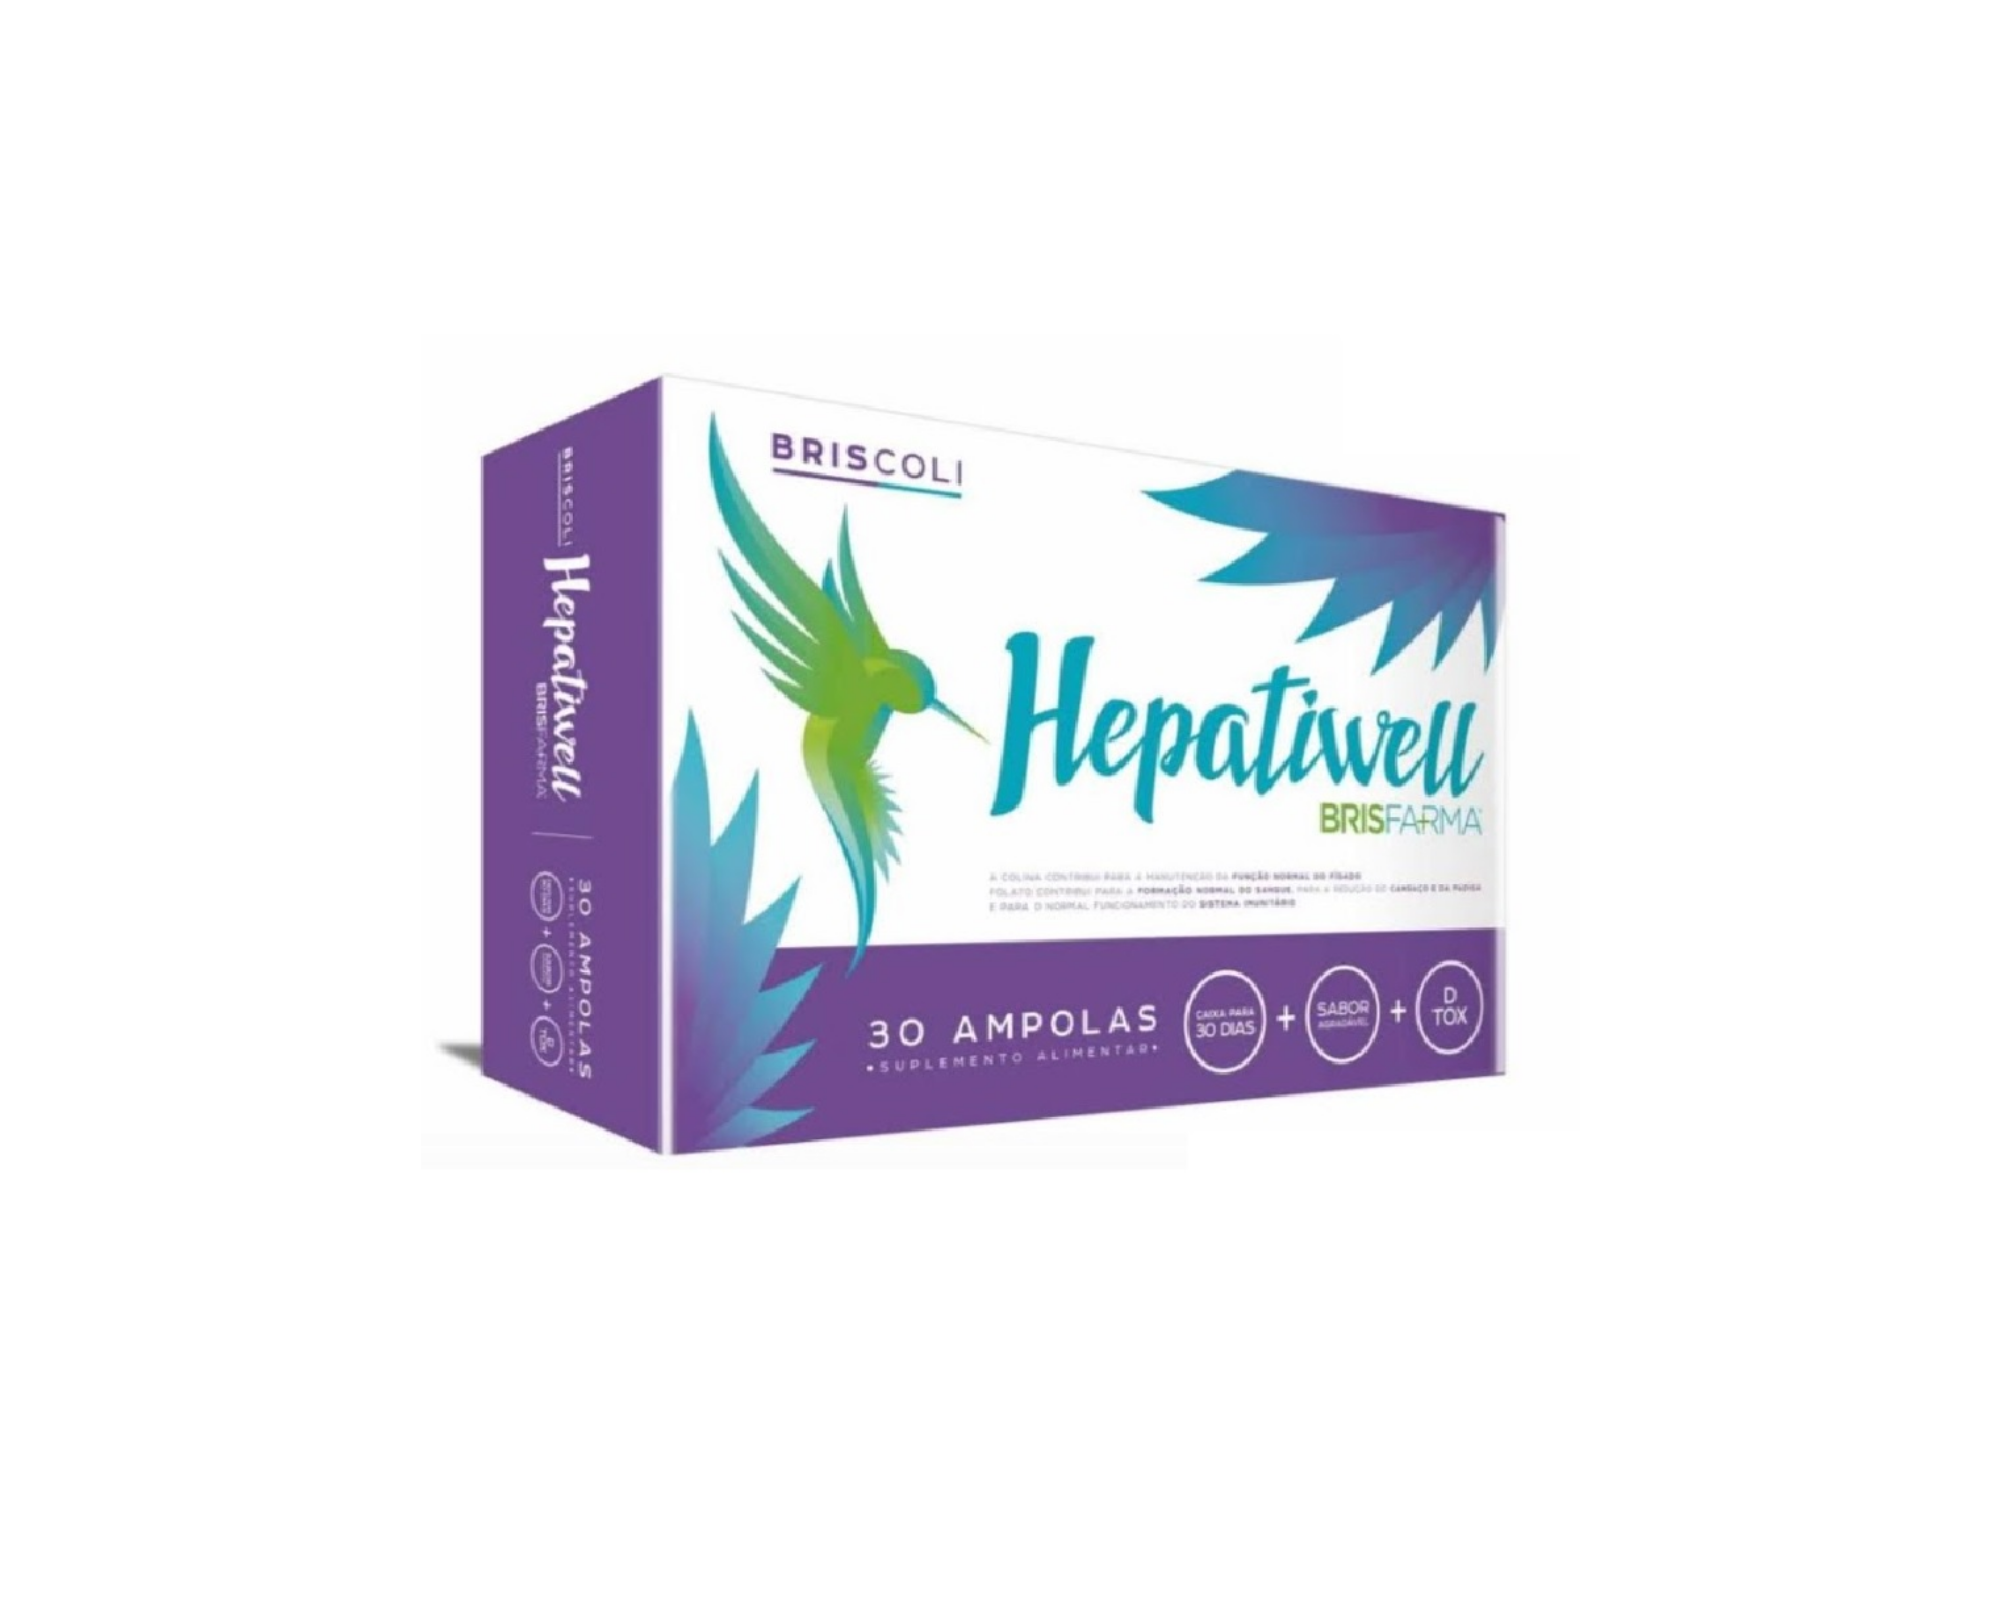 Hepatiwell - 30 ampolas